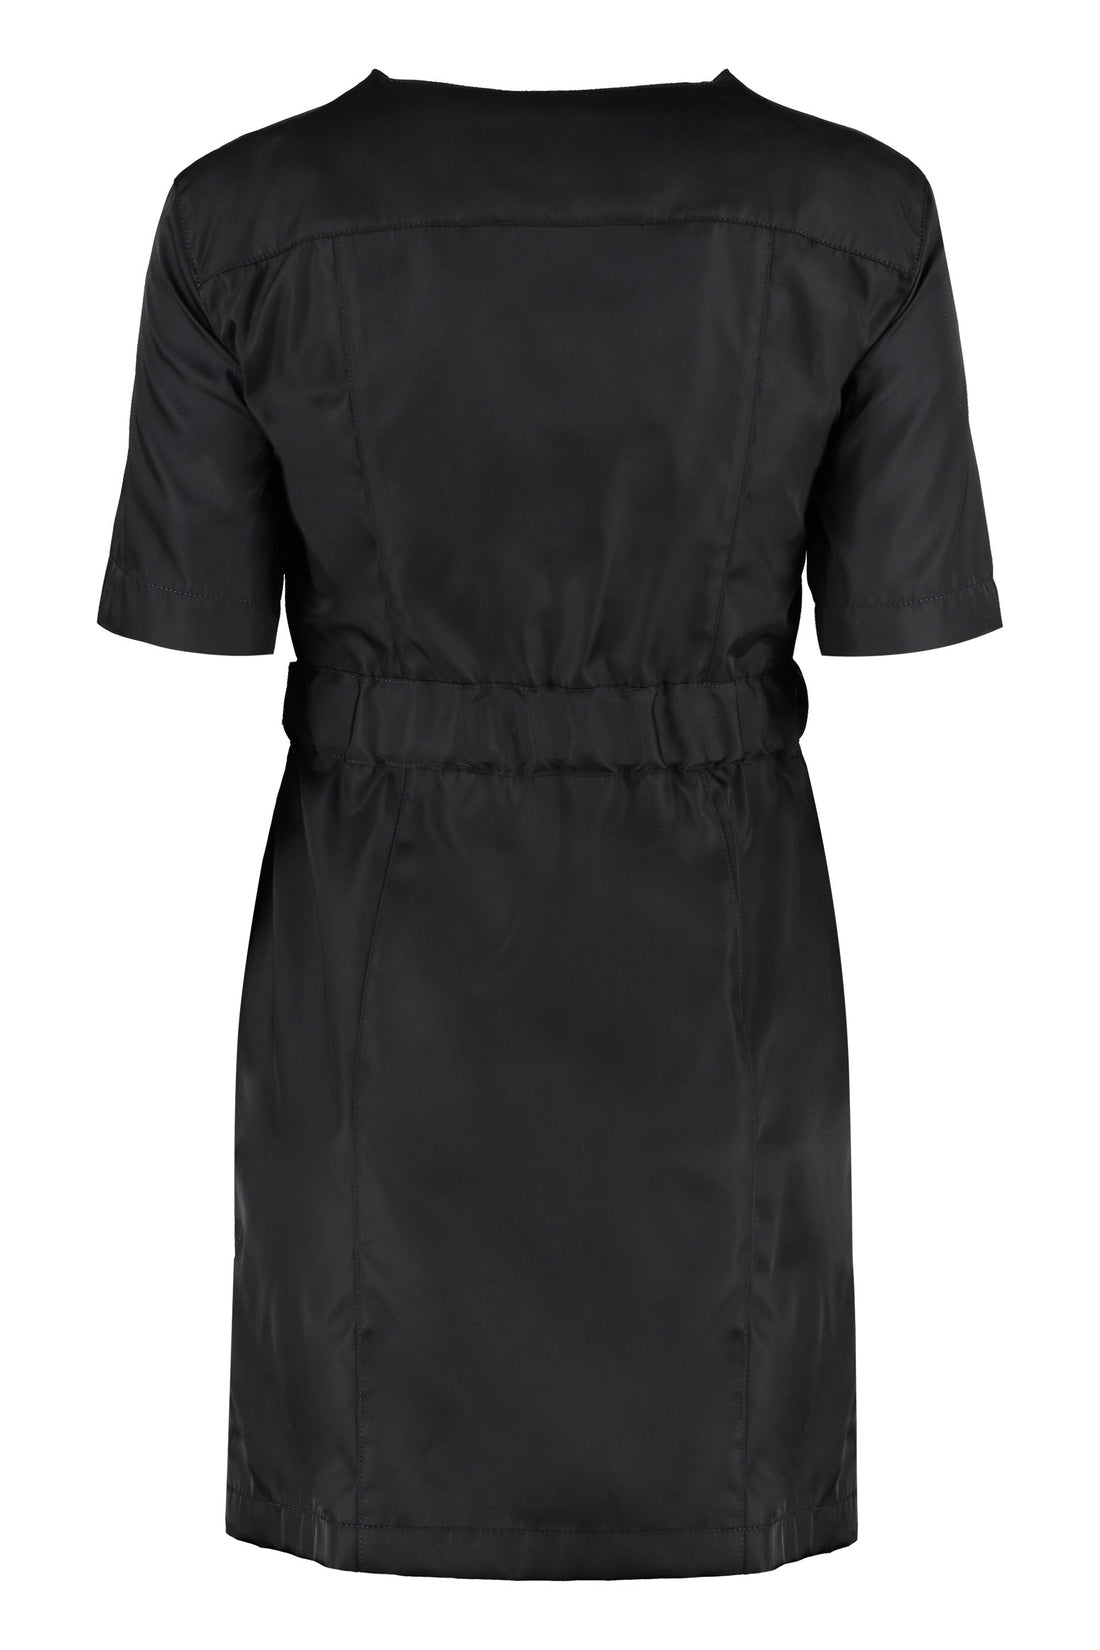 Givenchy-OUTLET-SALE-Technical nylon dress-ARCHIVIST